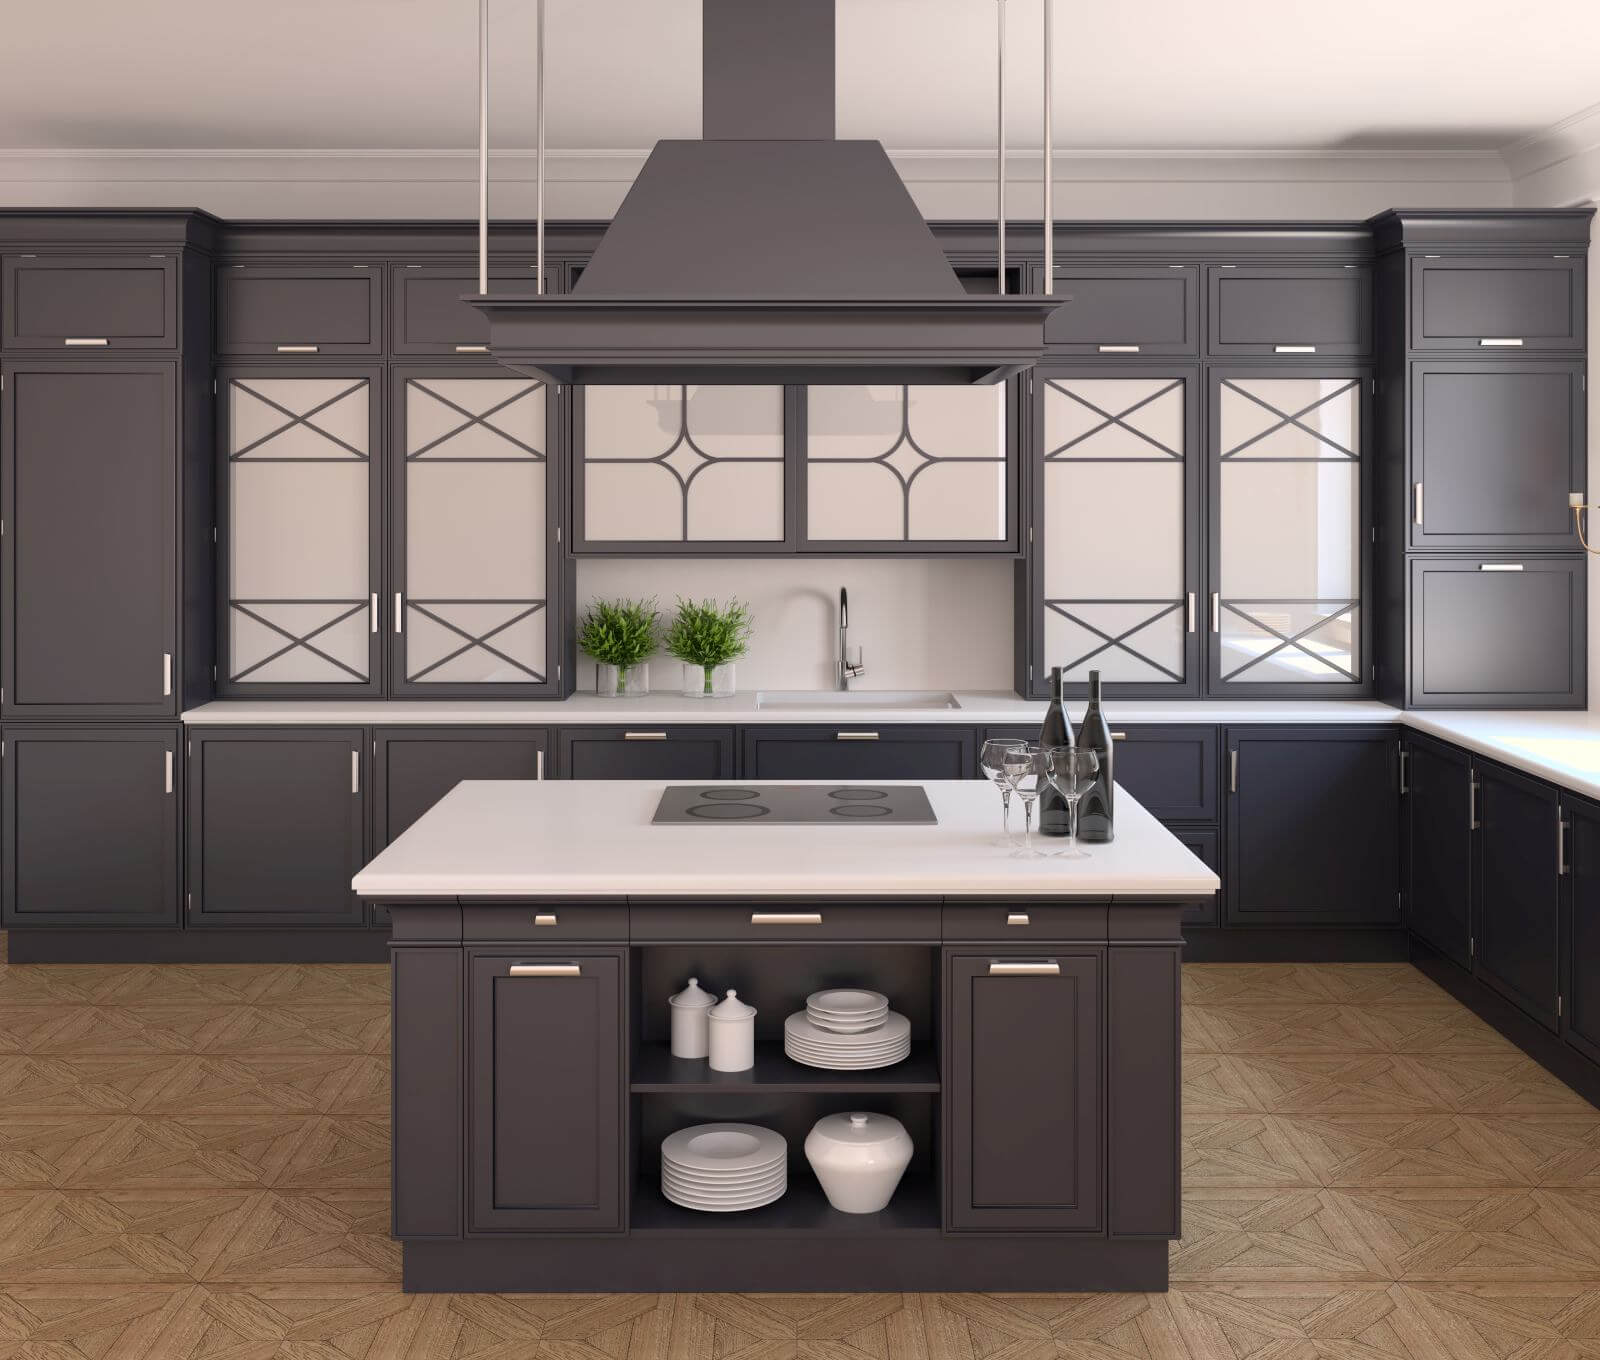 Interior of classic black kitchen. 3d render.